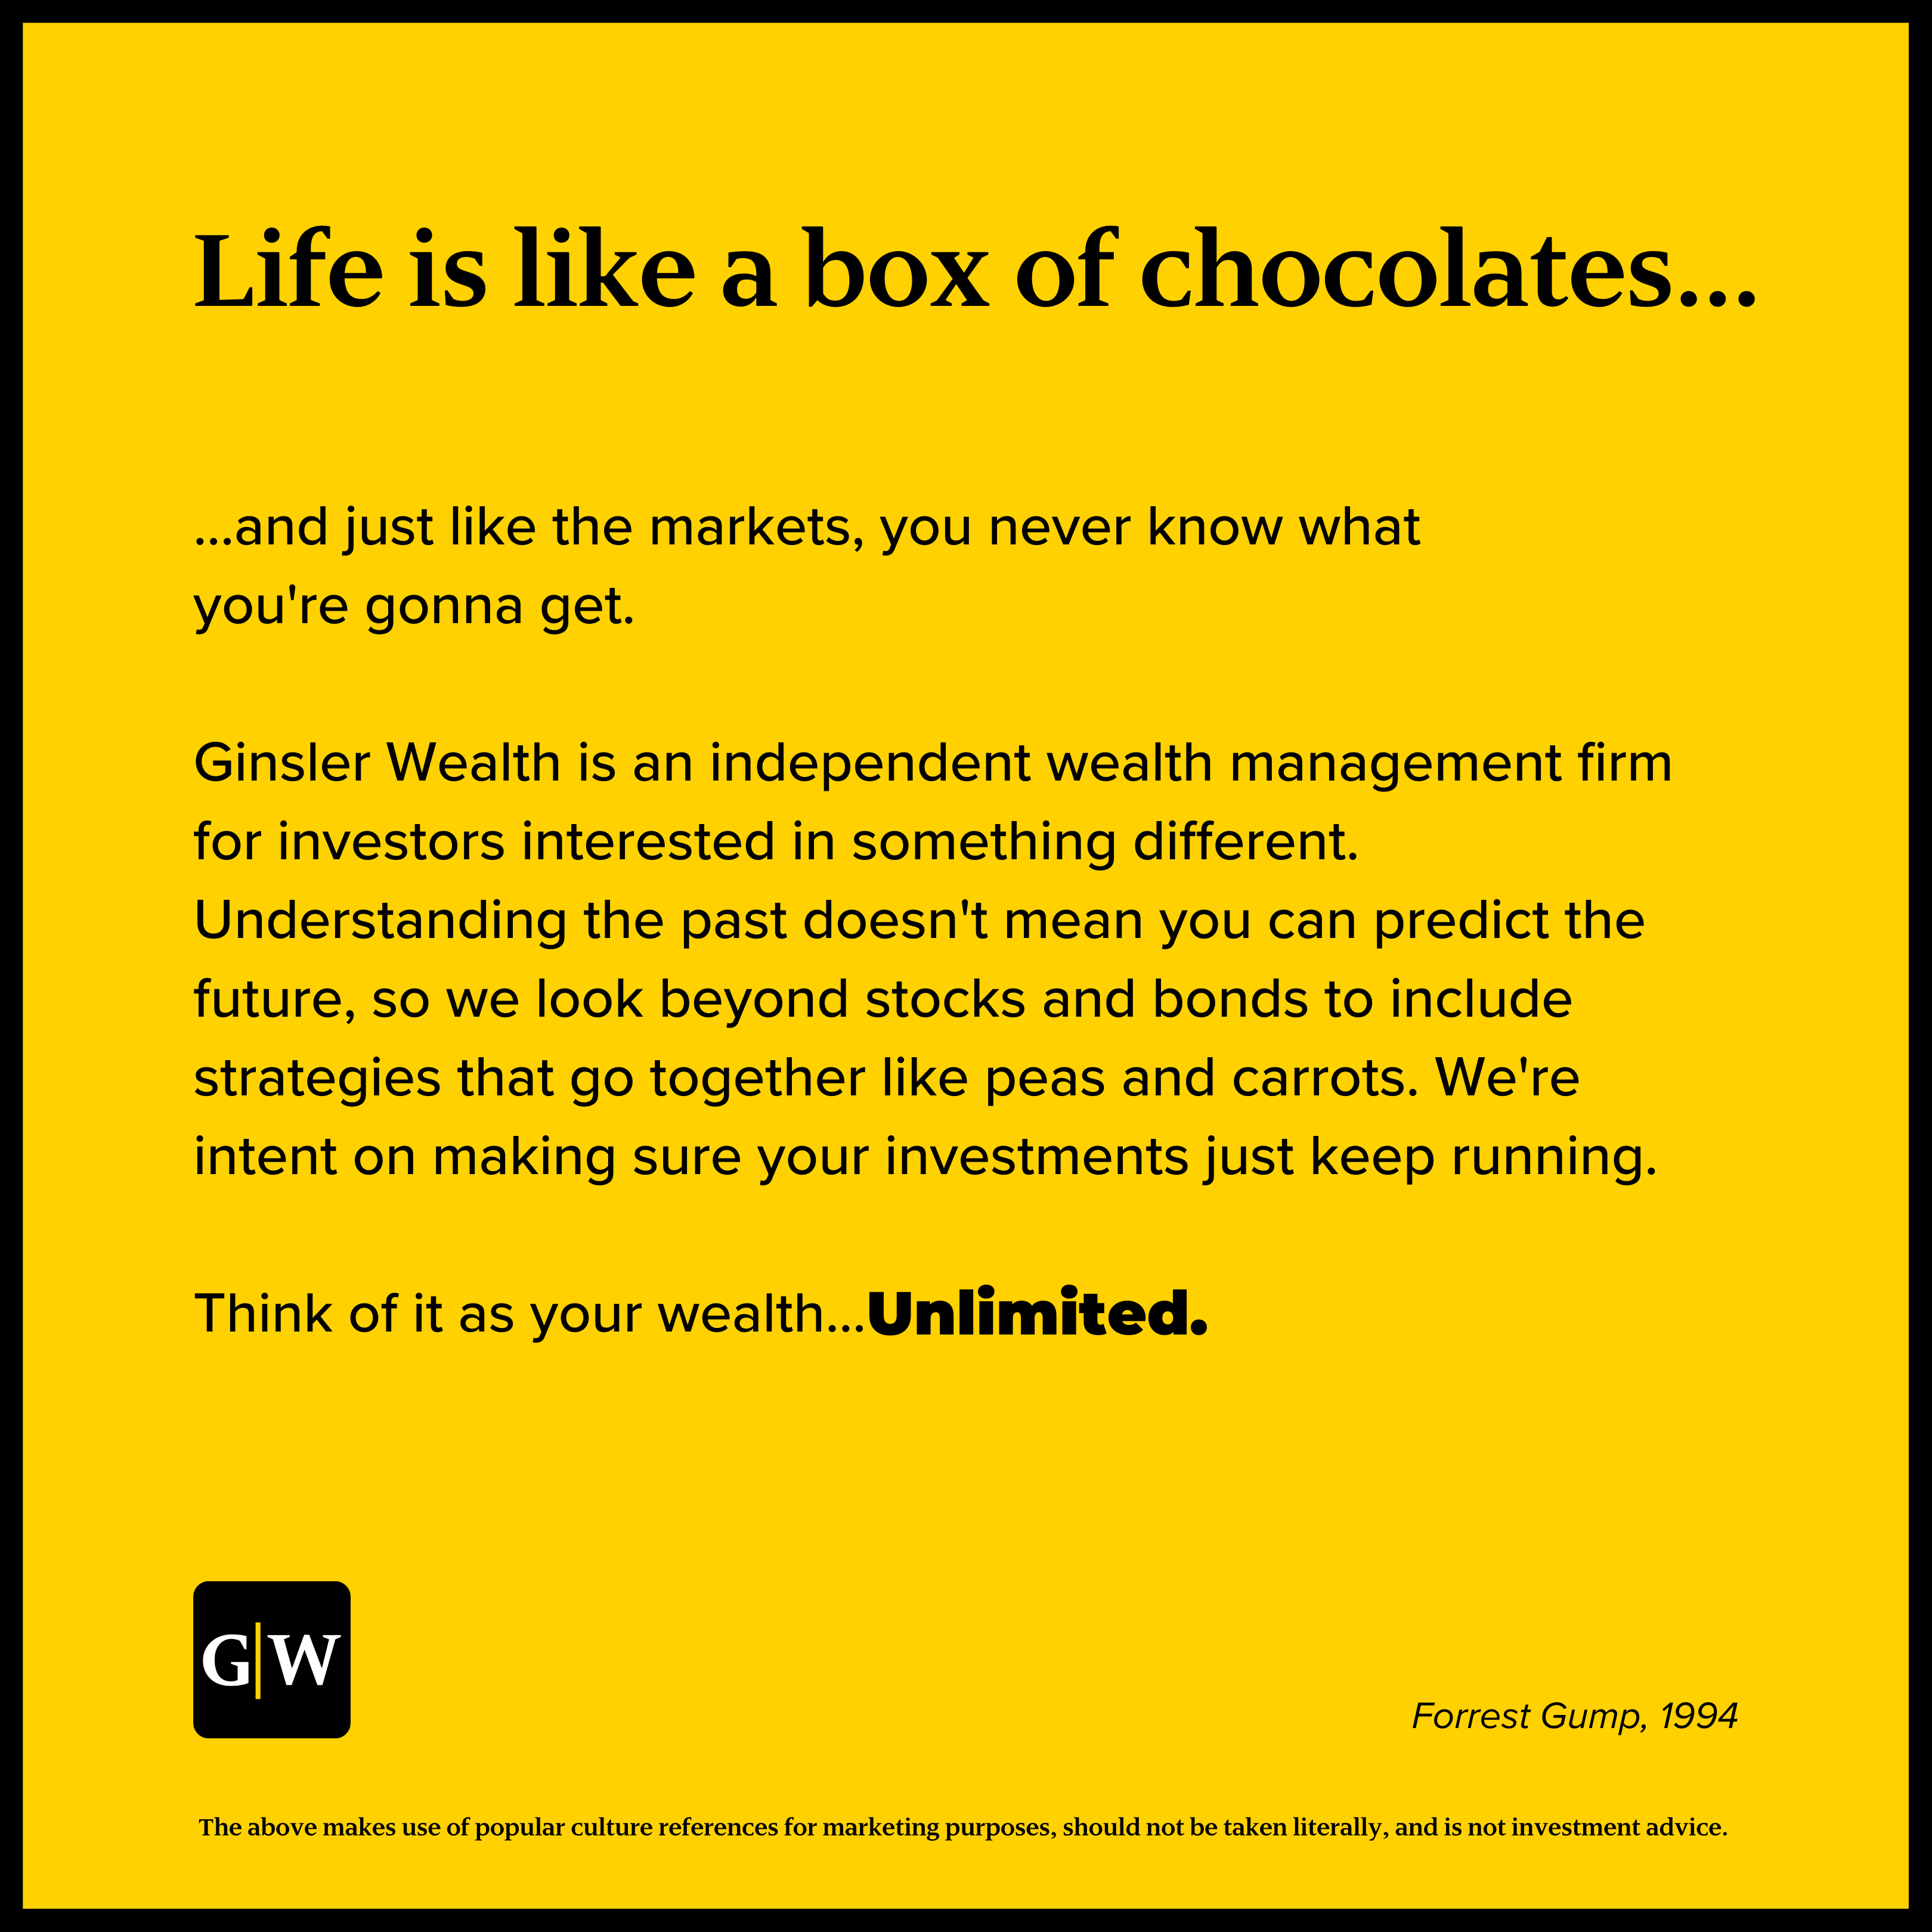 Life is like a box of chocolates...